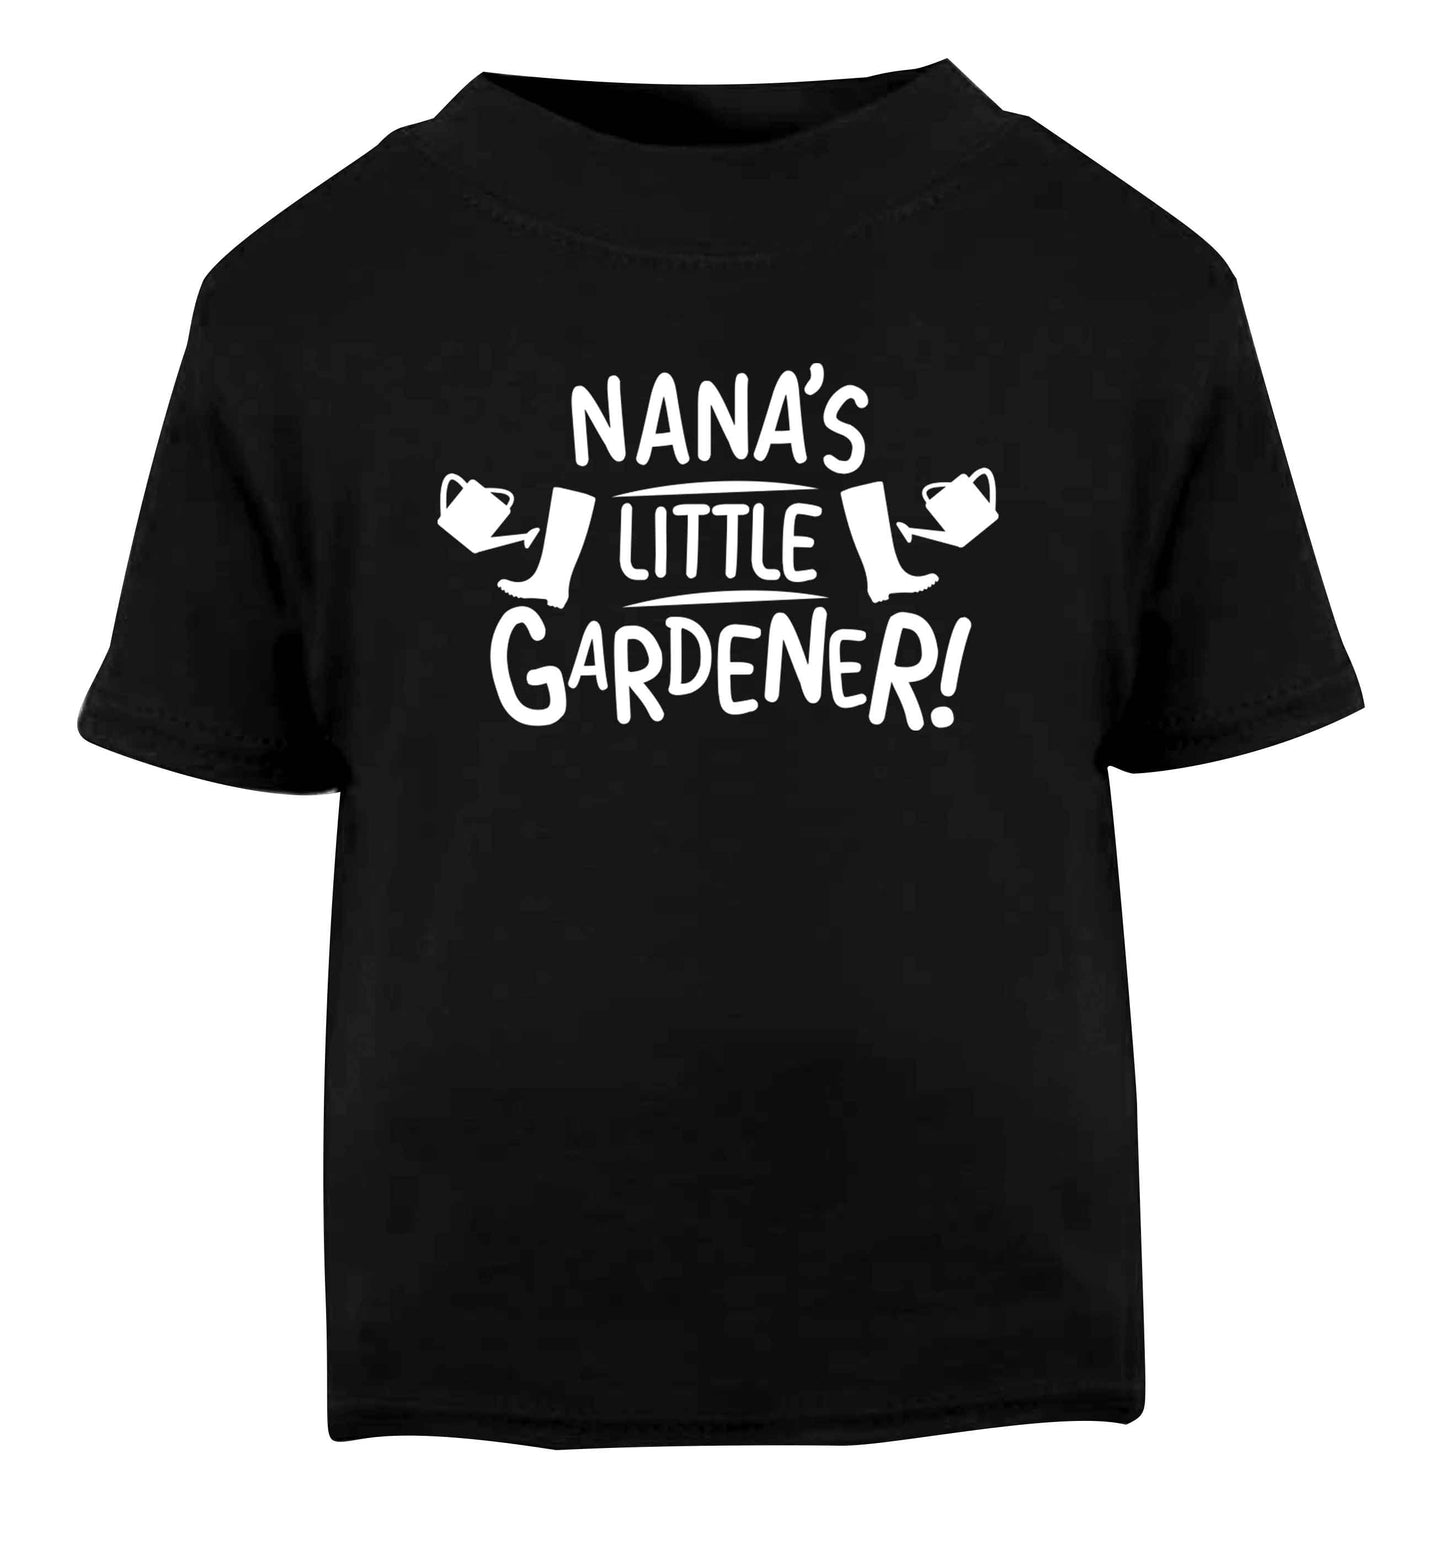 Nana's little gardener Black Baby Toddler Tshirt 2 years